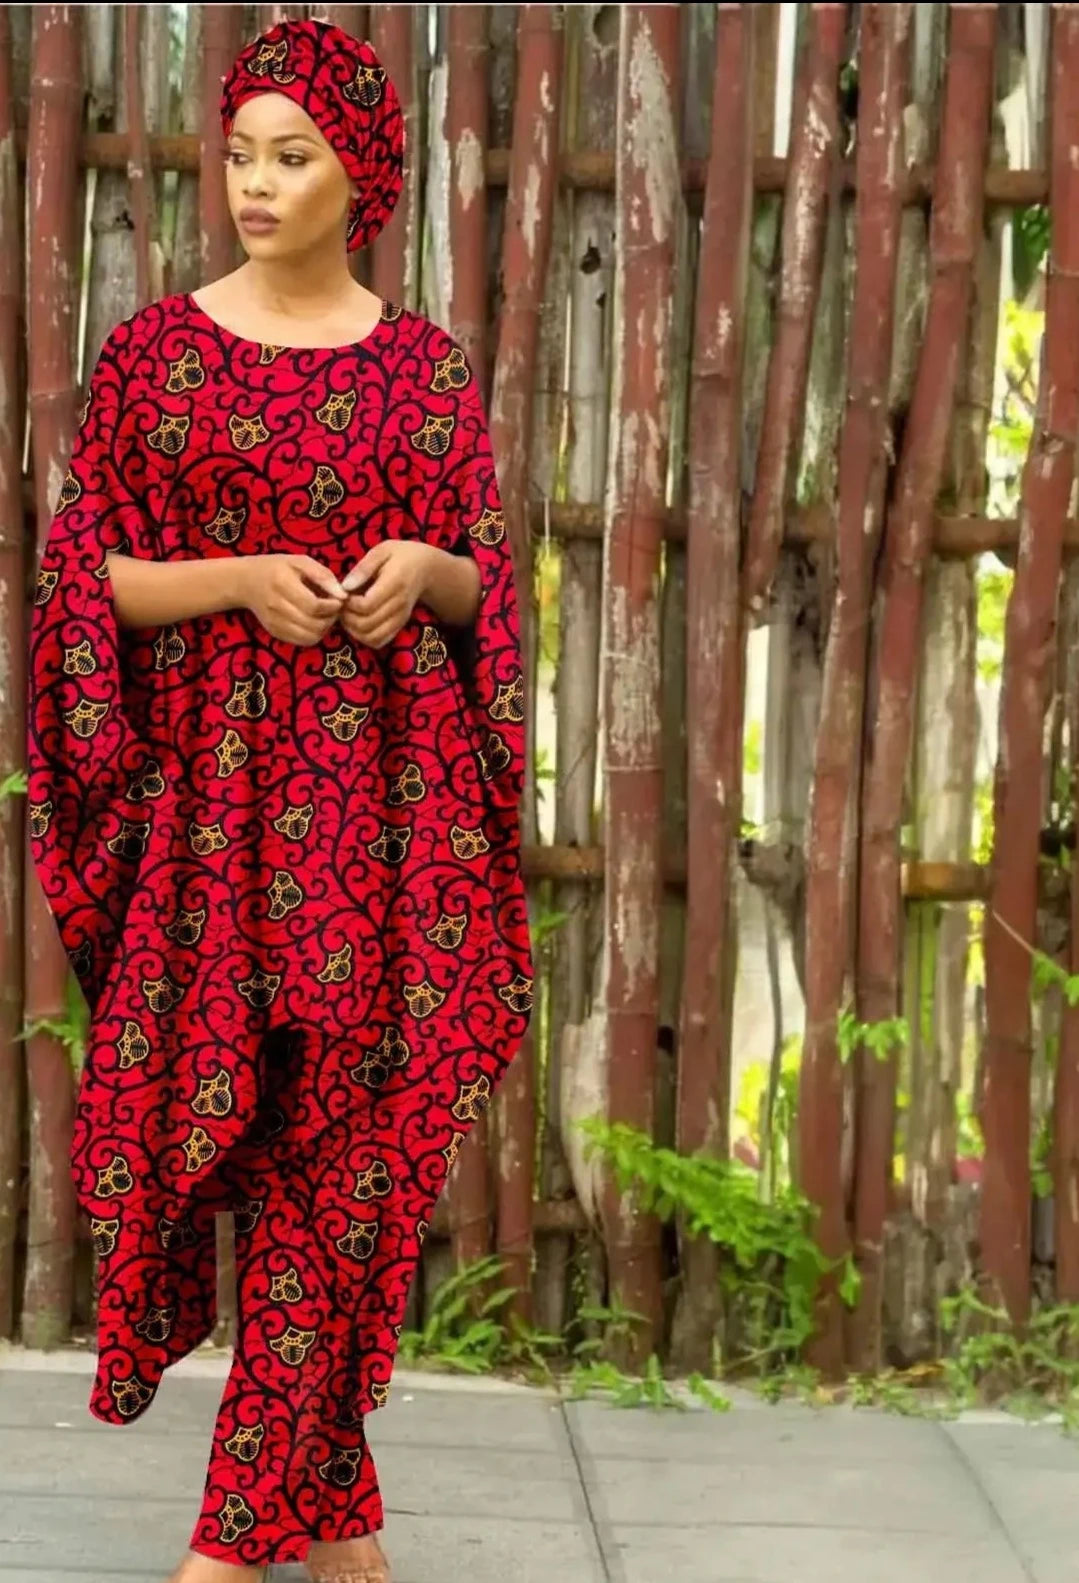 African Clothes for Women Dashiki Print Long Dress Pants